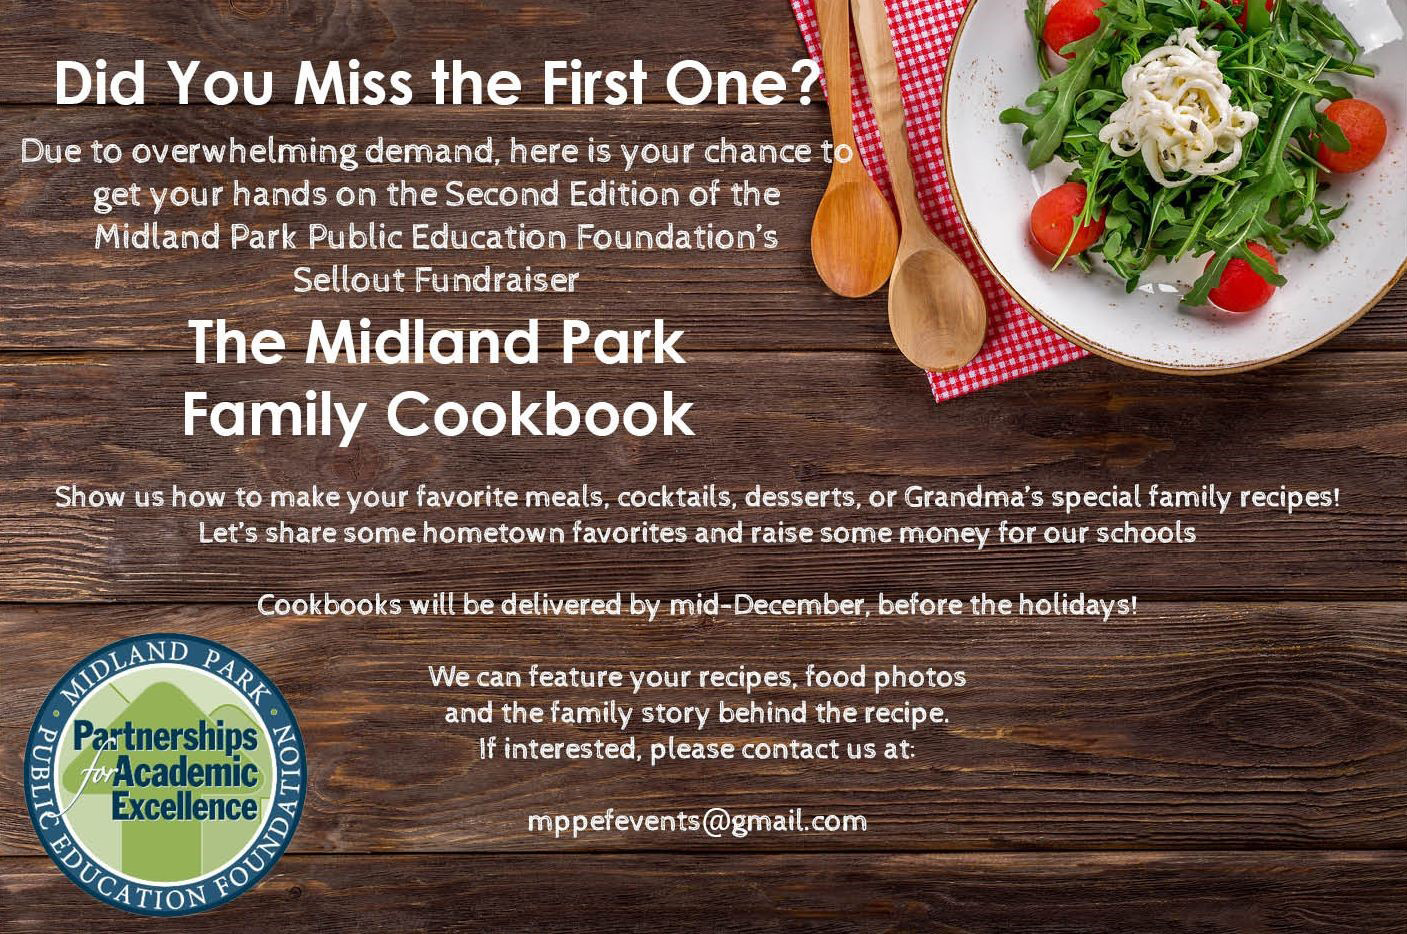 The Midland Park Family Cookbook